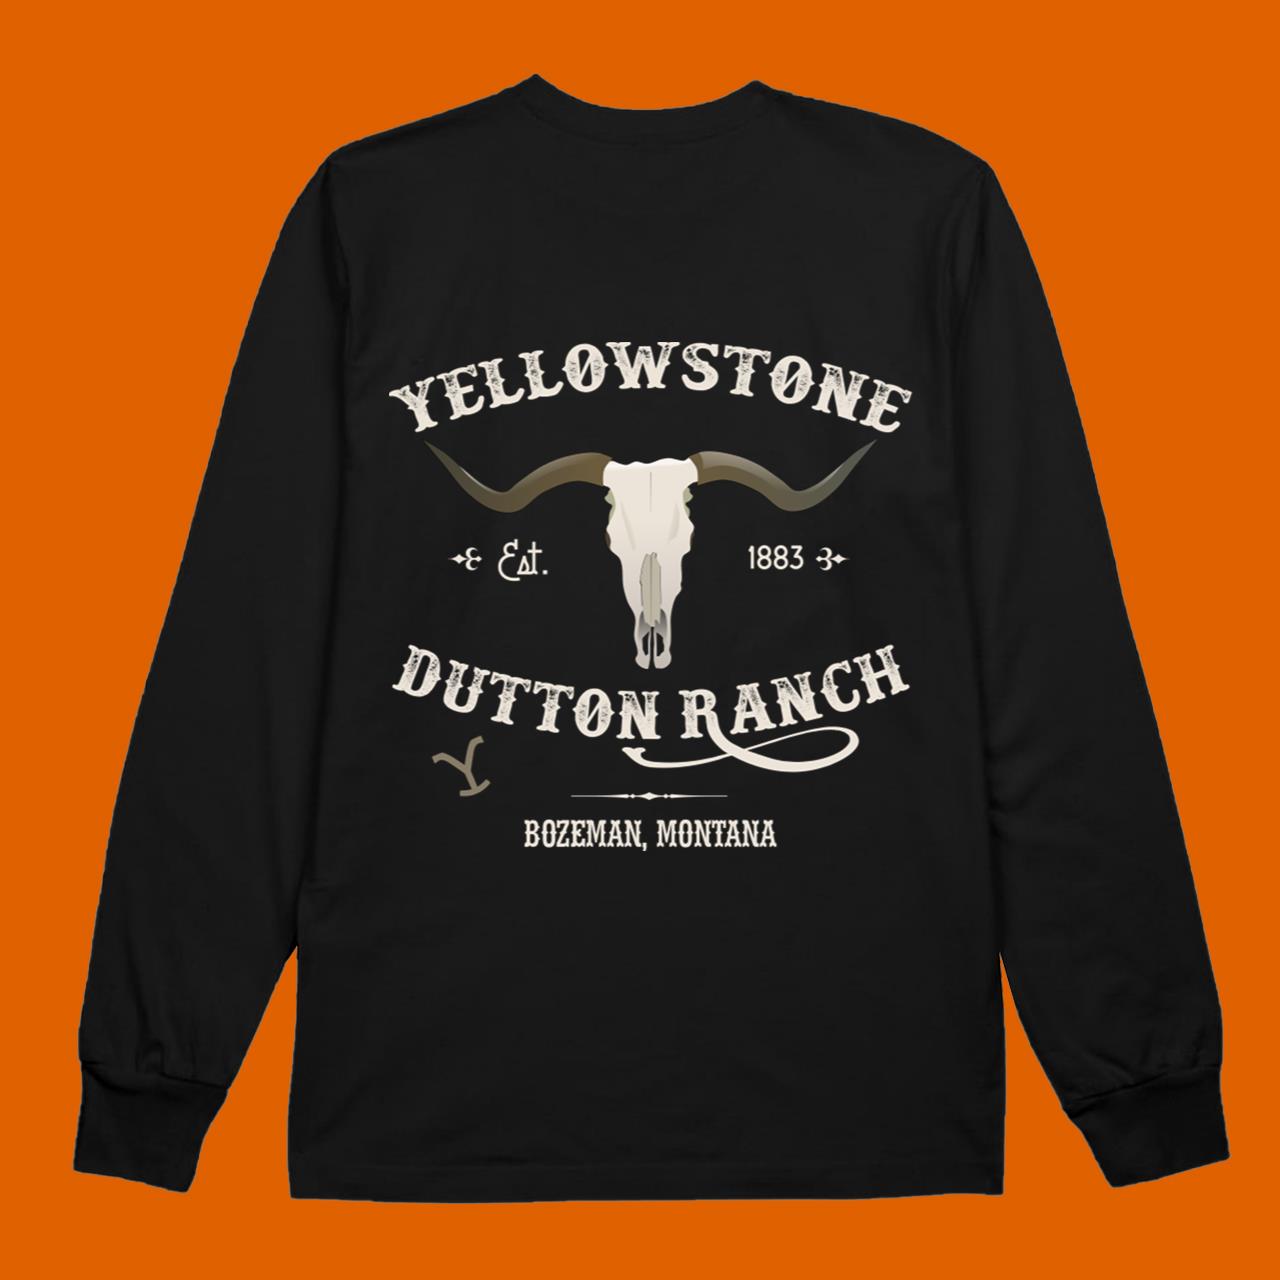 Yellowstone Dutton Ranch 1883 T-Shirt